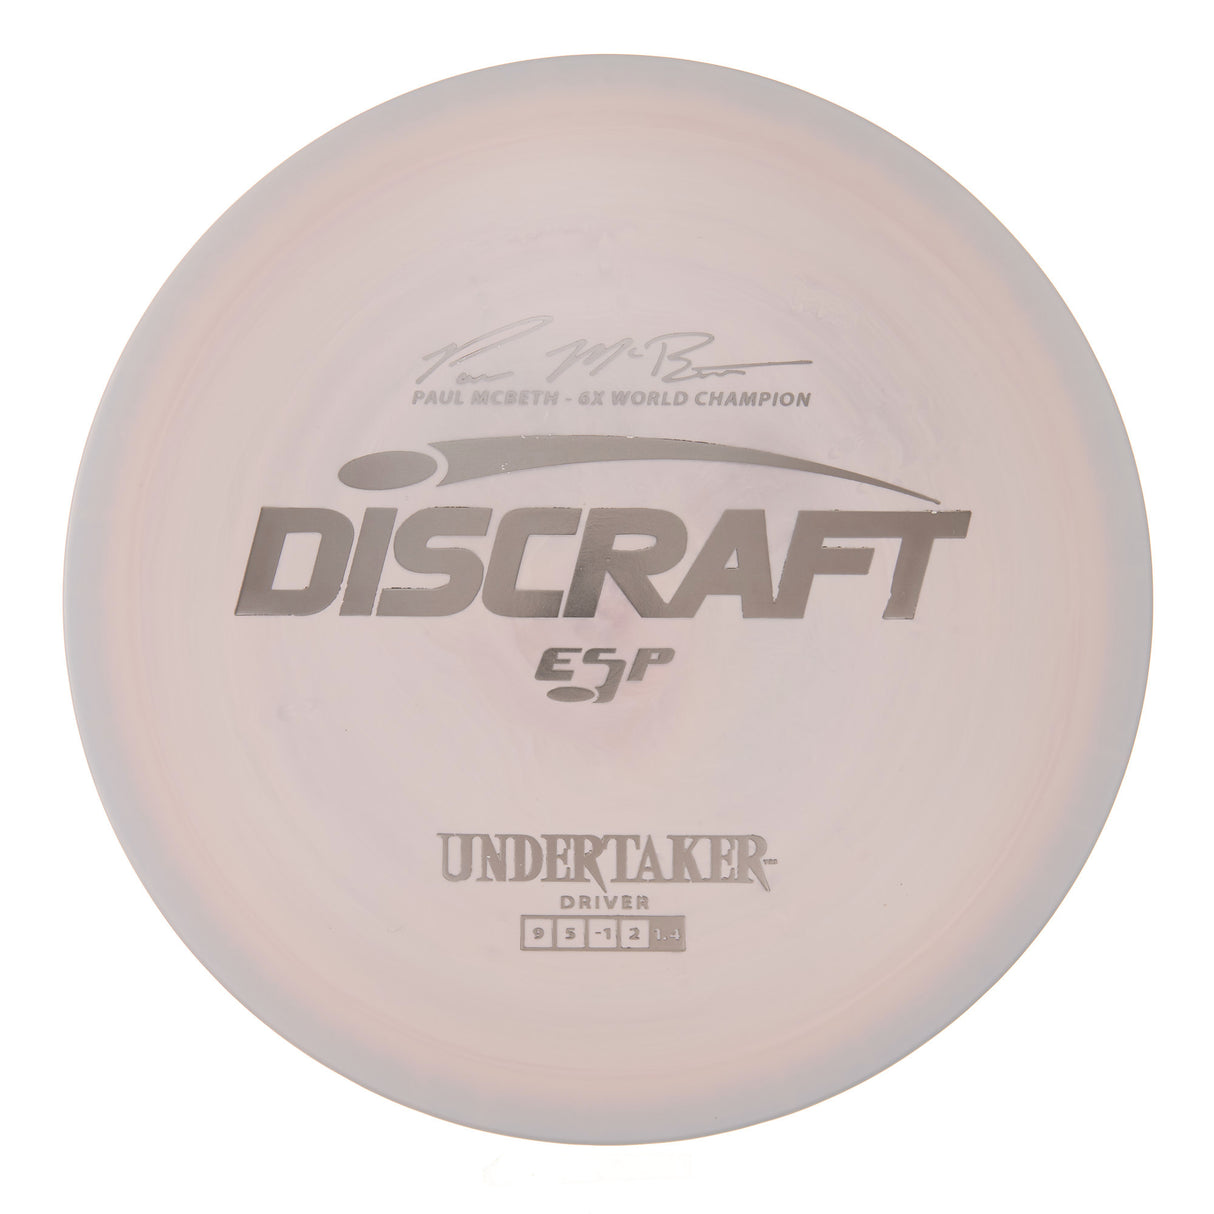 Discraft Undertaker - Paul McBeth 6x World Champion ESP 175g | Style 0015